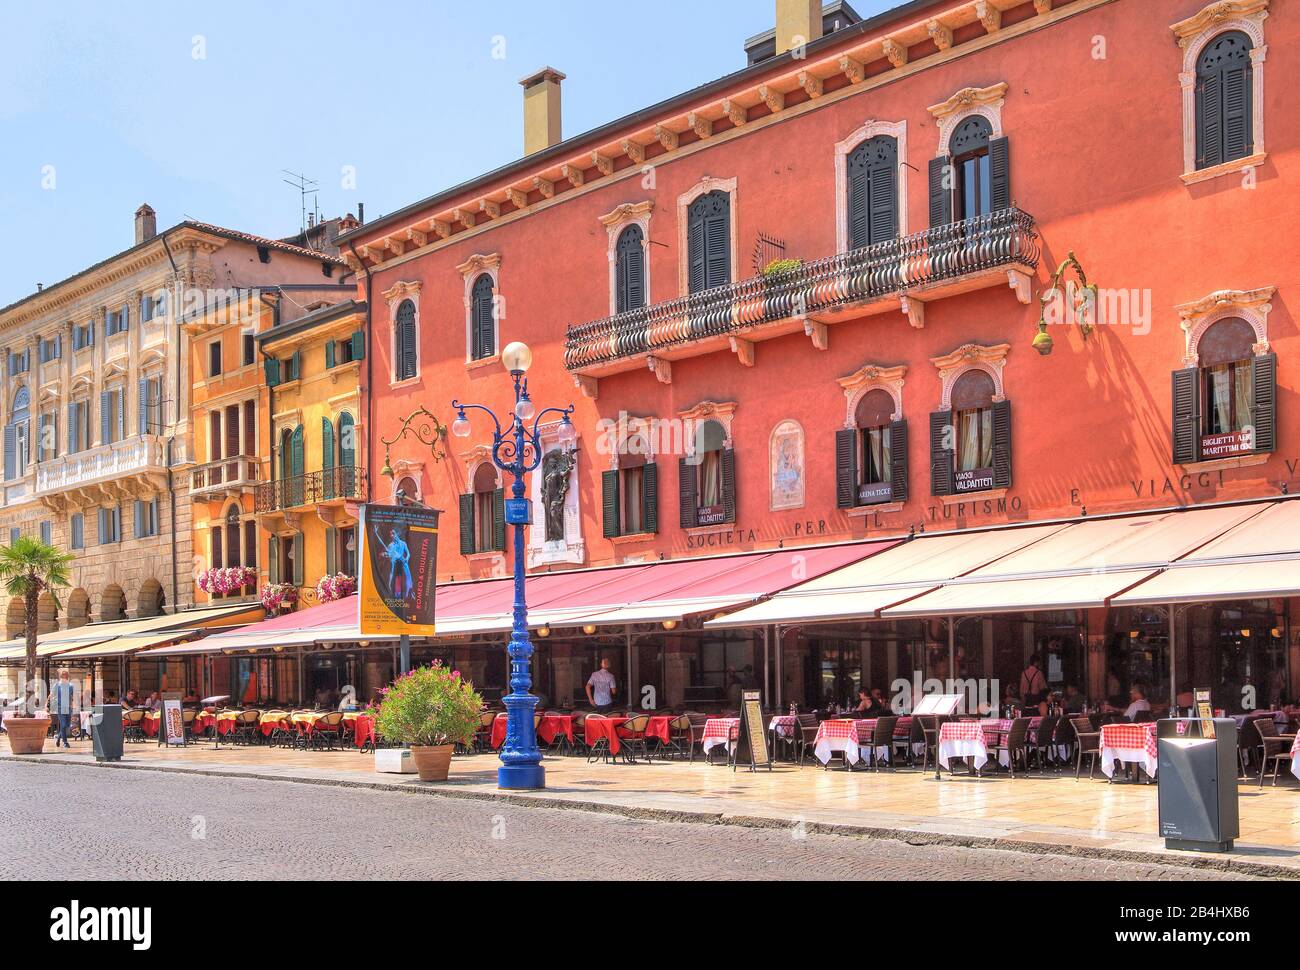 Palazzi en Piazza Bra con terrazas restaurante, Casco antiguo, Verona, Veneto, Italia Foto de stock